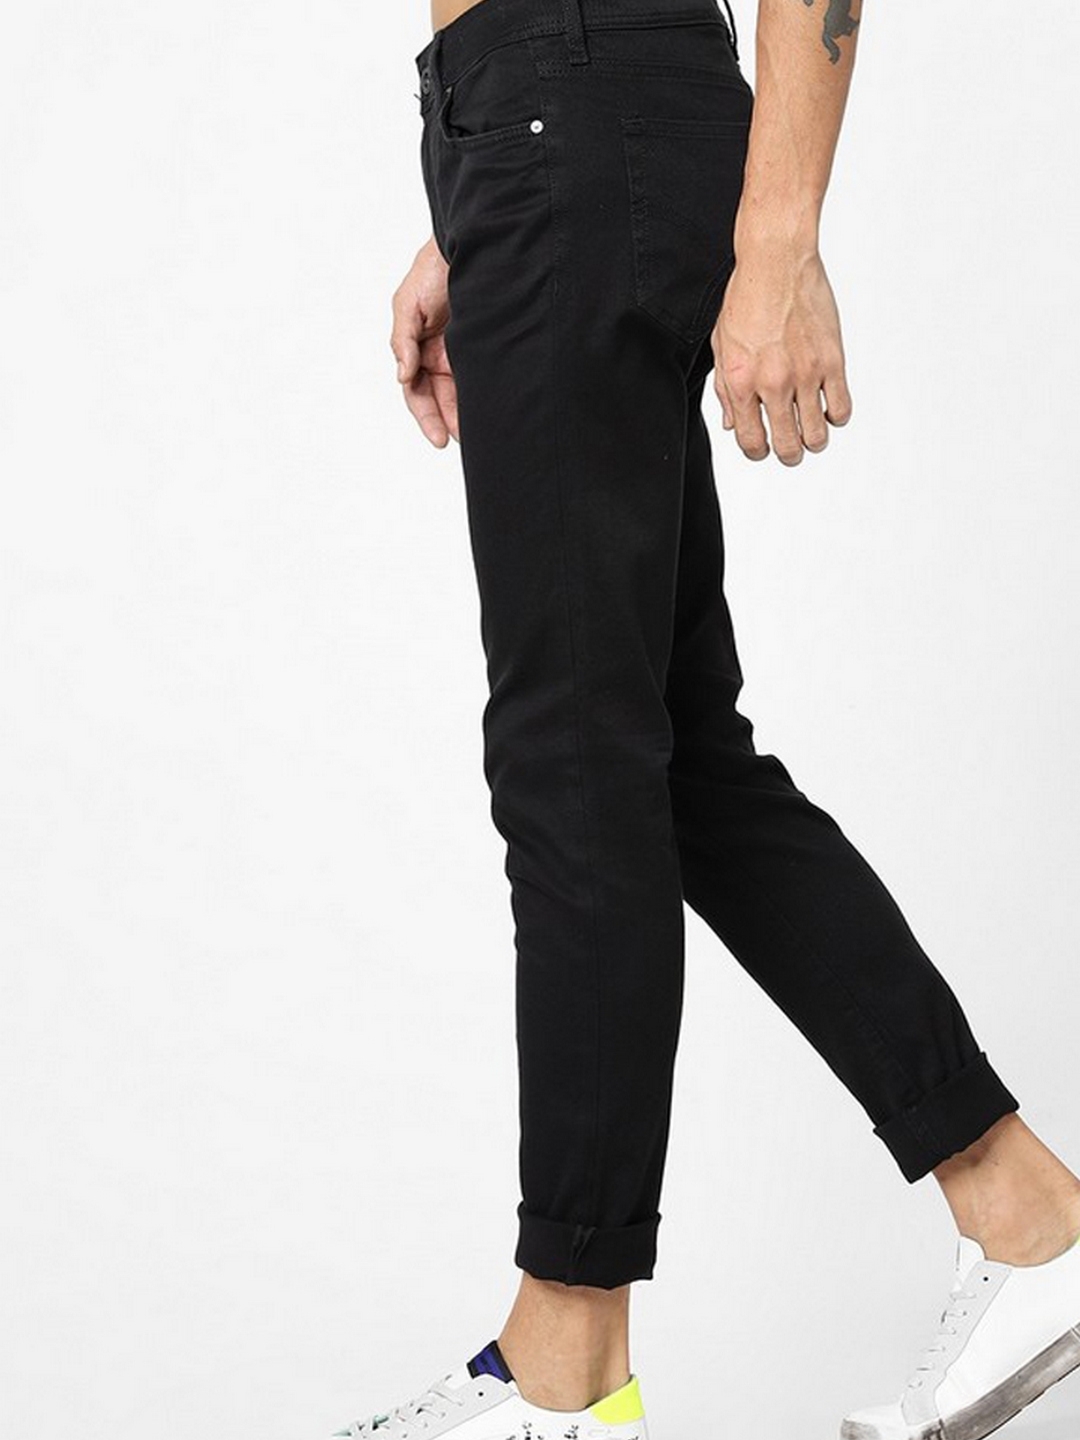 Men's Sax Zip Skinny Fit BLACK Jeans